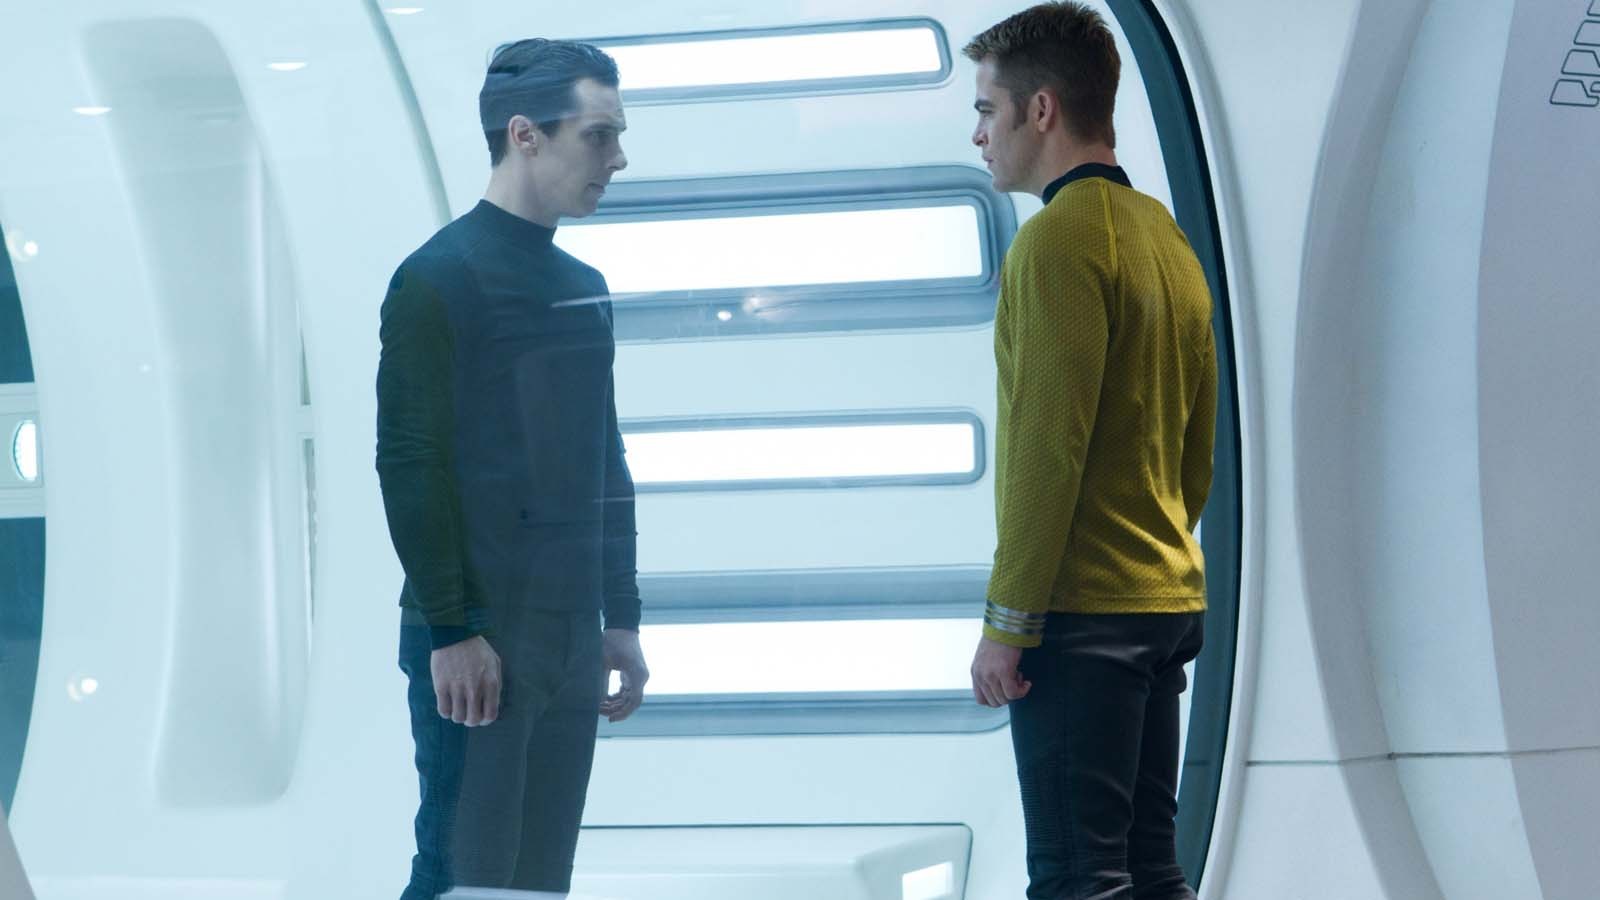 People 1600x900 Star Trek Into Darkness Benedict Cumberbatch Chris Pine Khan villains movies Star Trek film stills James T. Kirk men